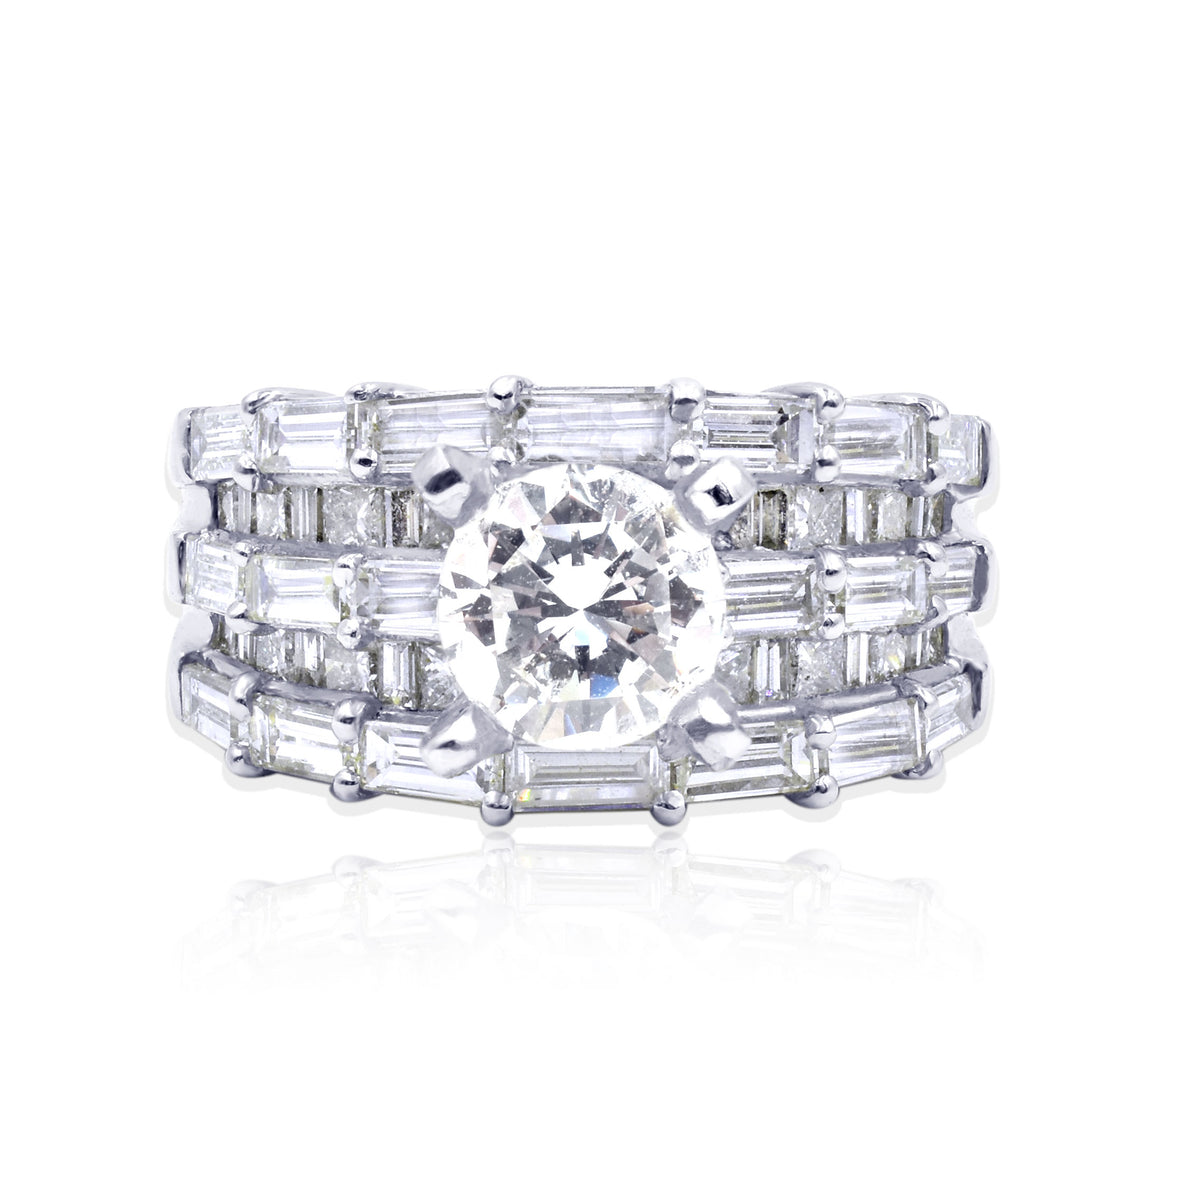 Platinum Baguette and Princess Cut Diamond Ring Setting